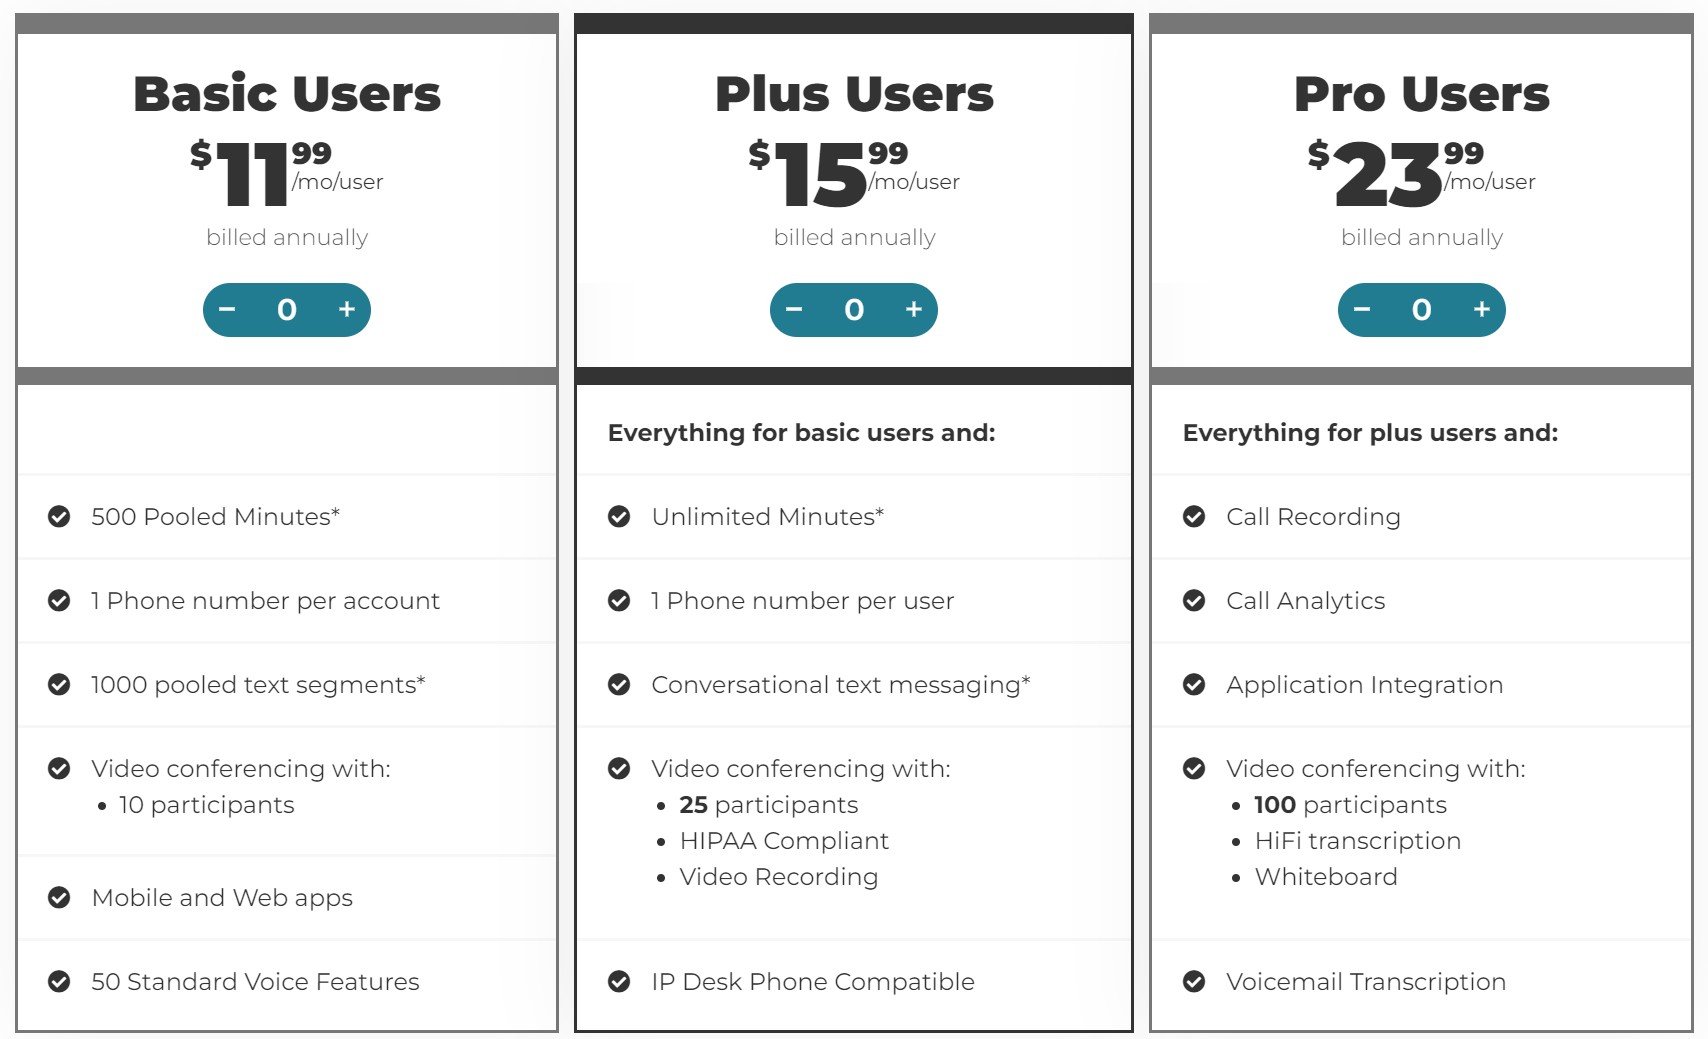 Phone.com Pricing